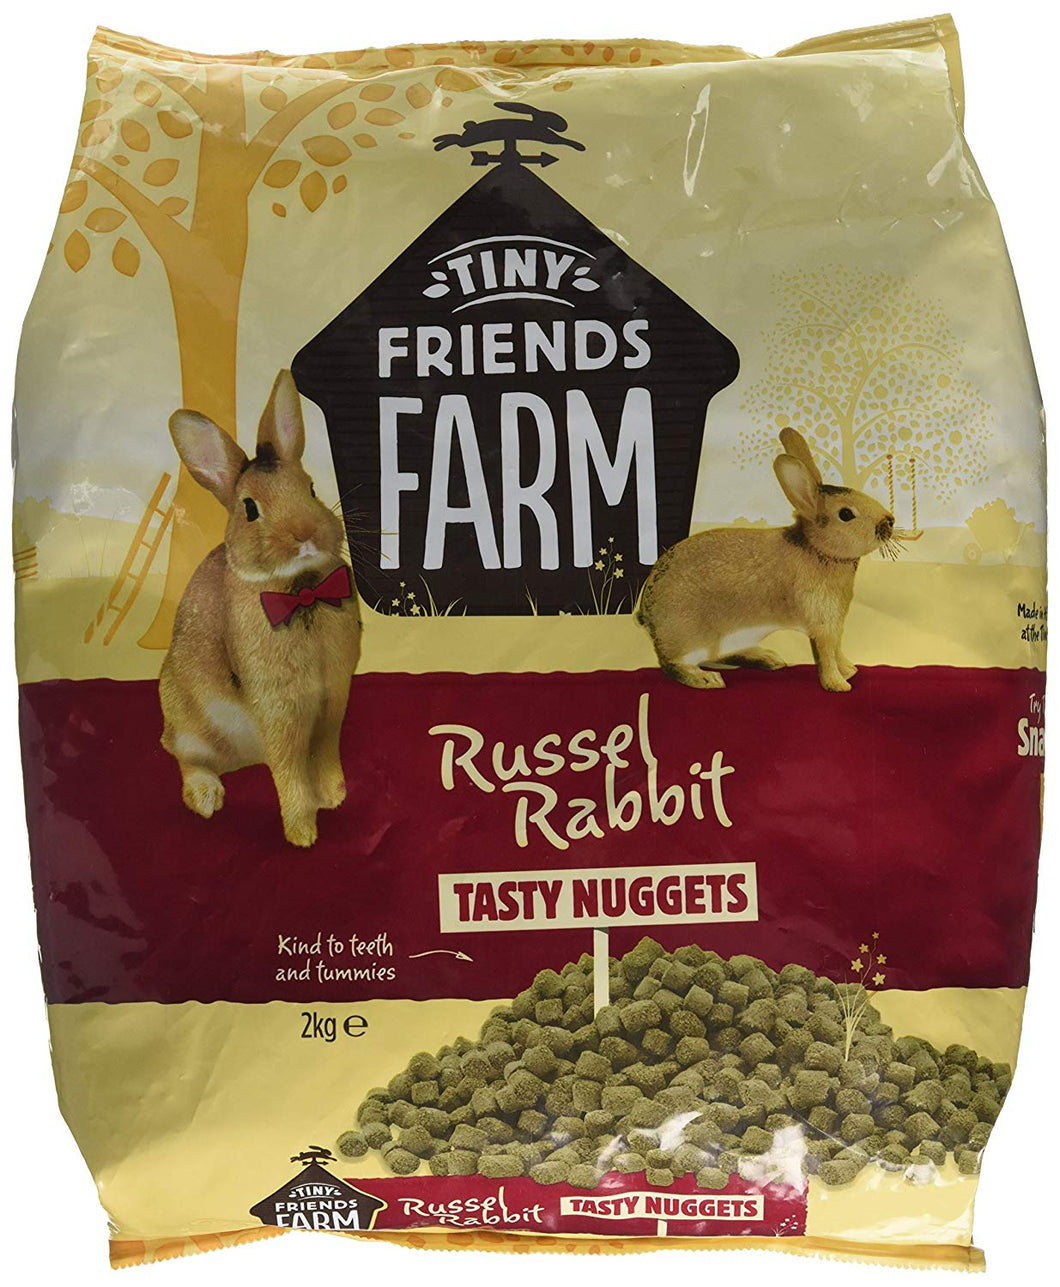 Supreme Tiny Friends Farm Russel Rabbit Tasty Nuggets Nutrition Food, 2 Kg